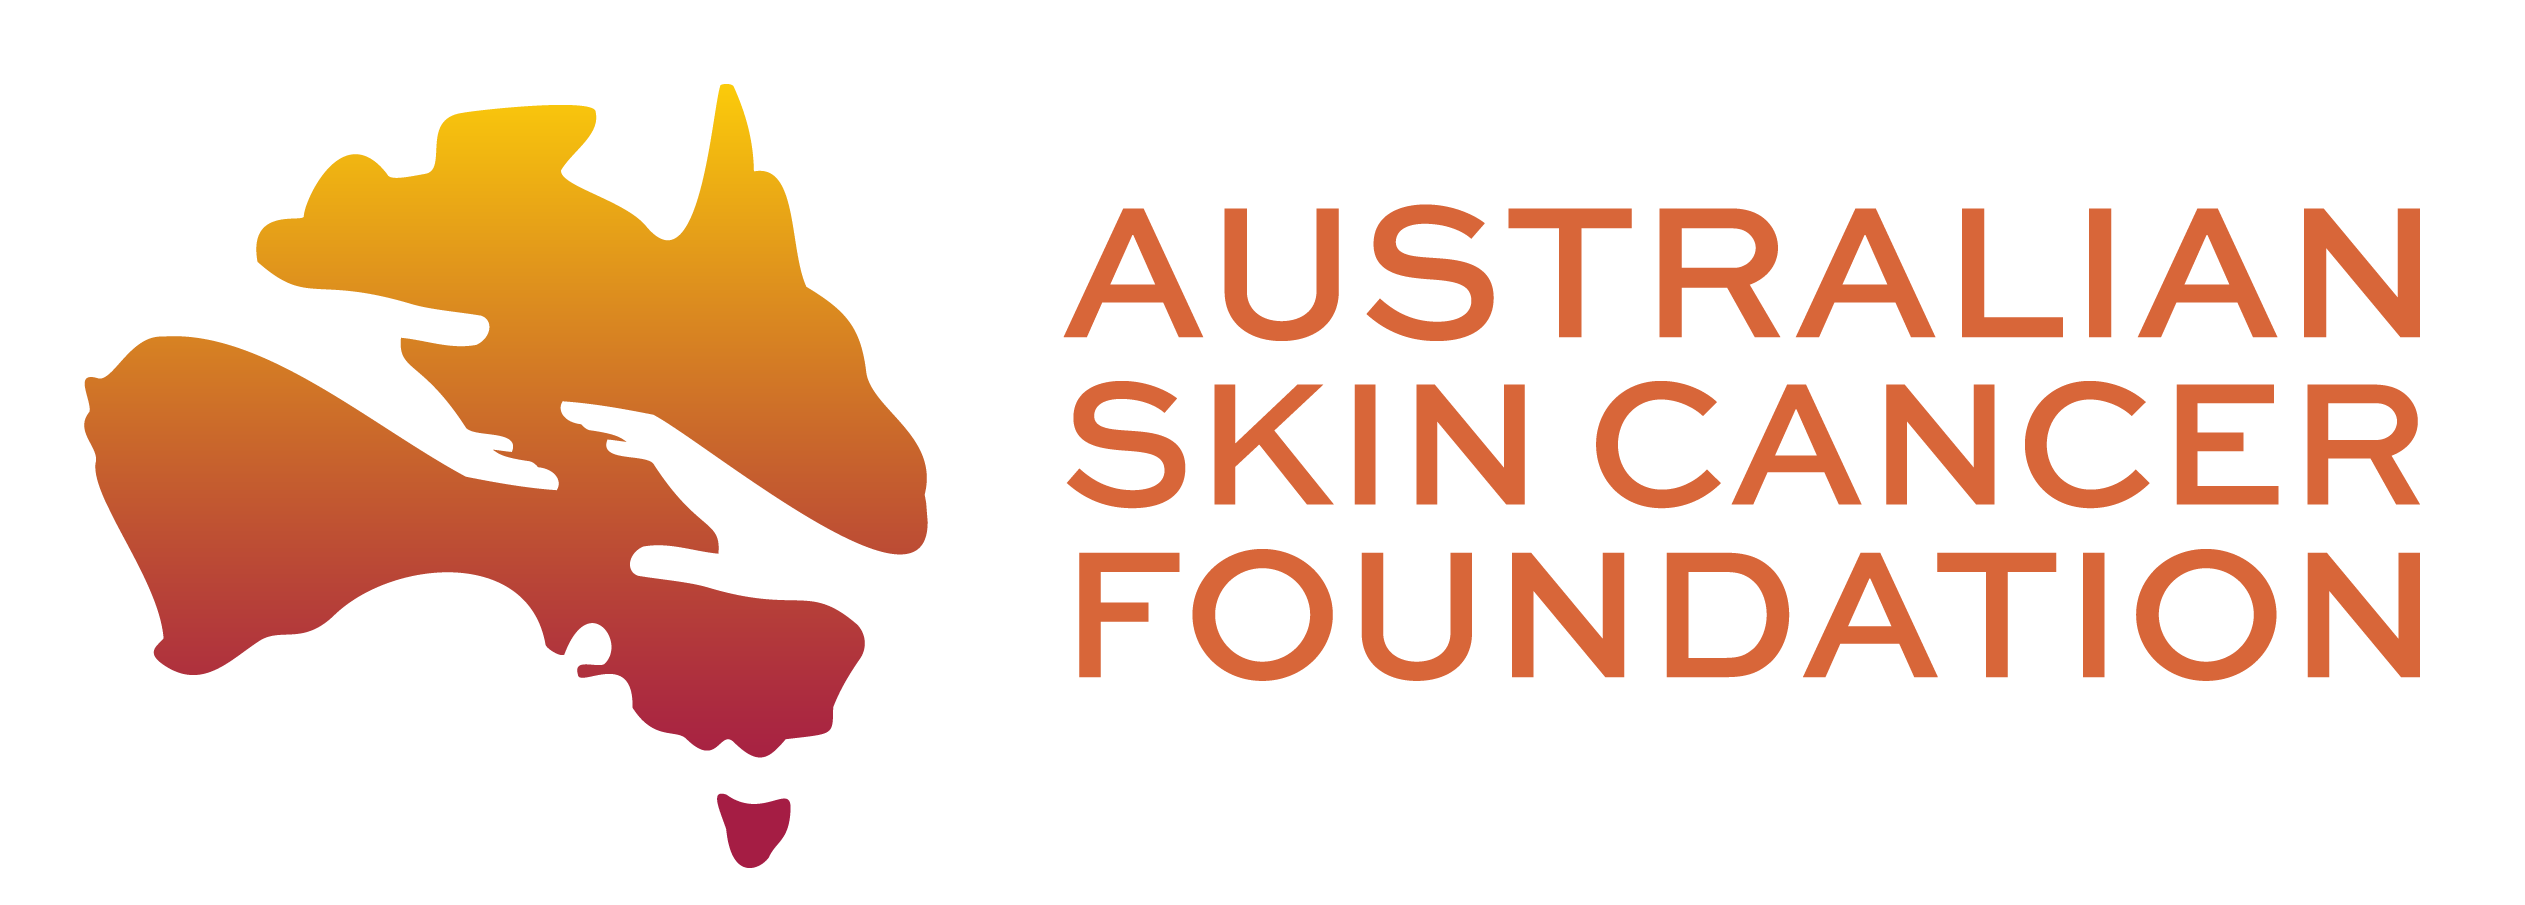 Australian Skin Cancer Foundation logo